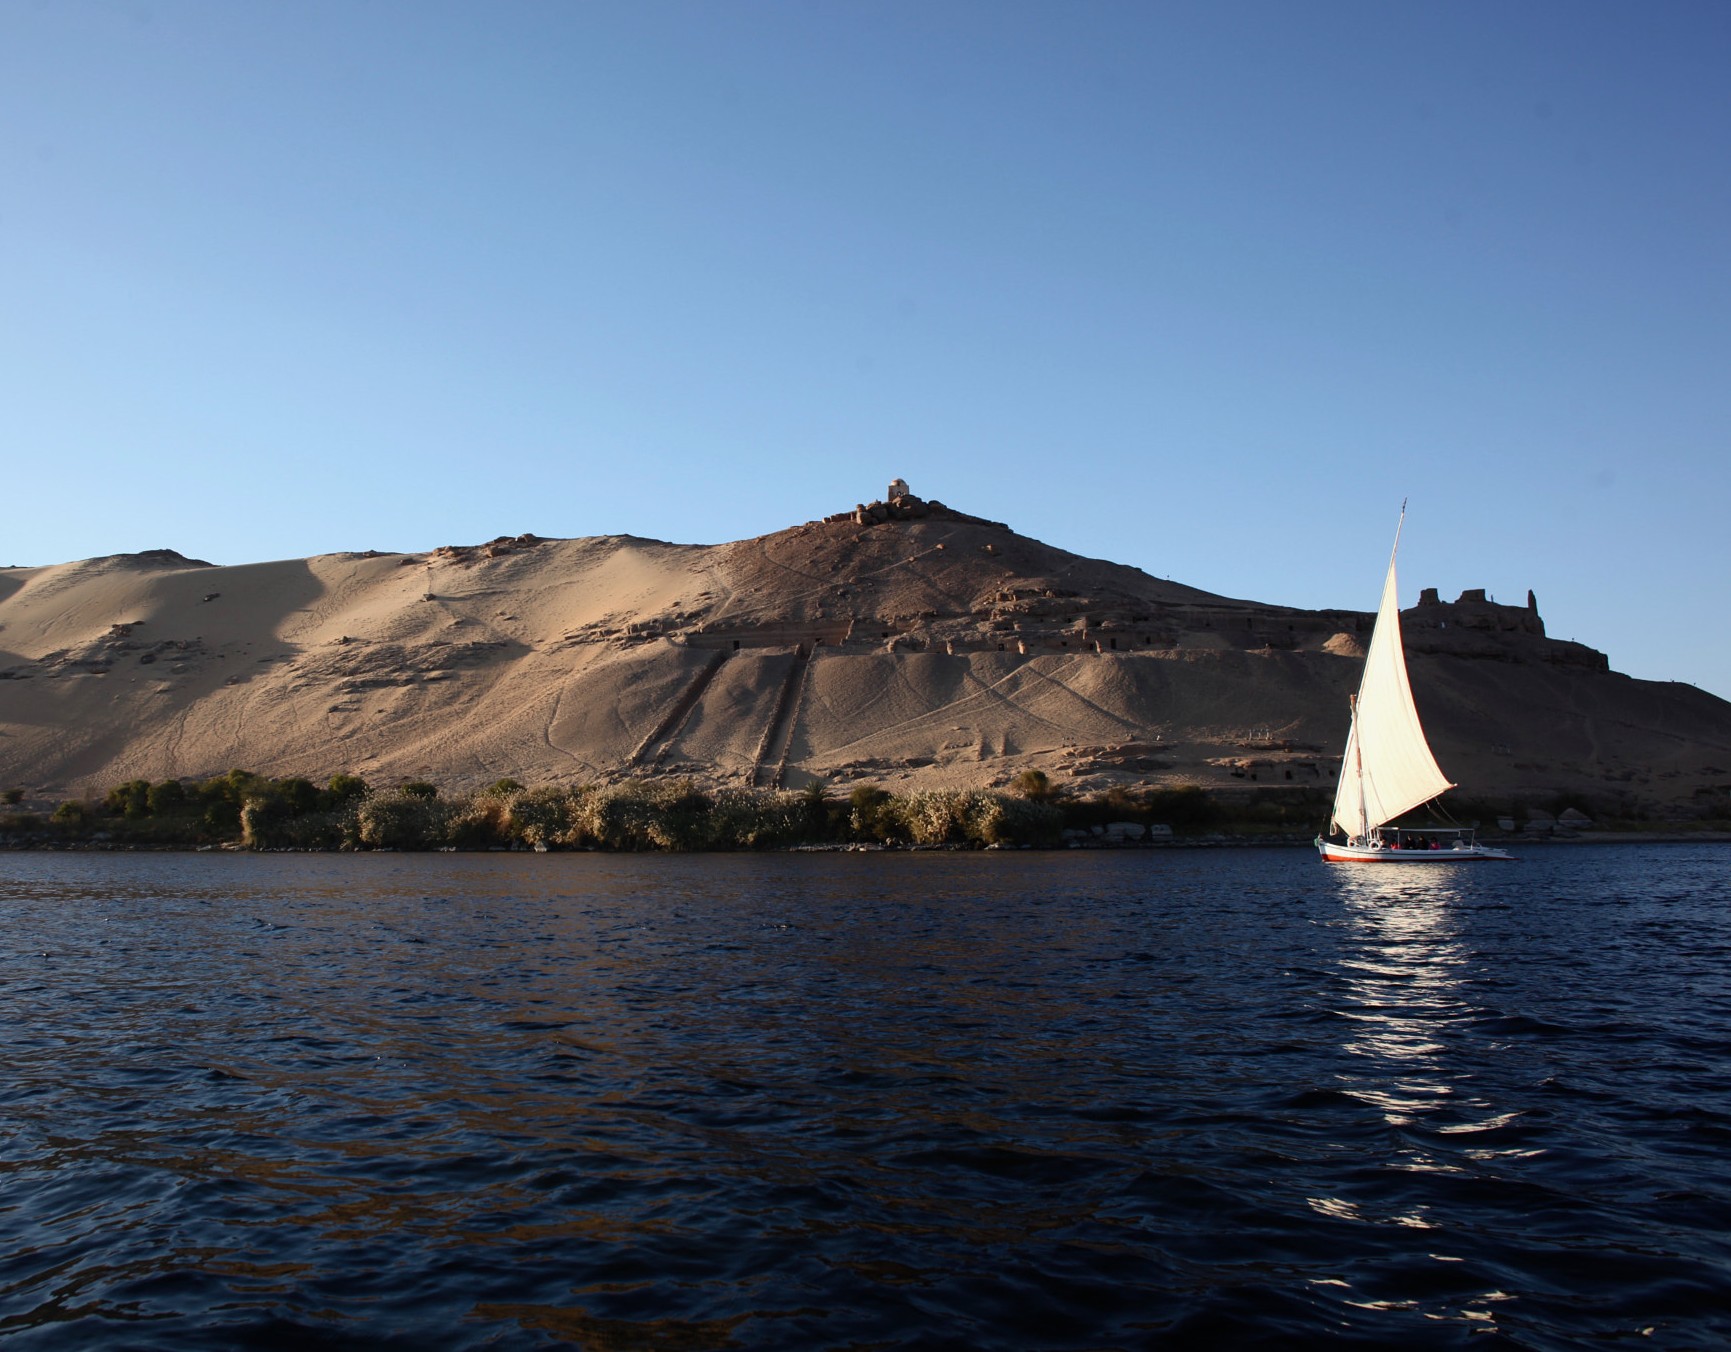 Aswan Boat trip to Soheil Island